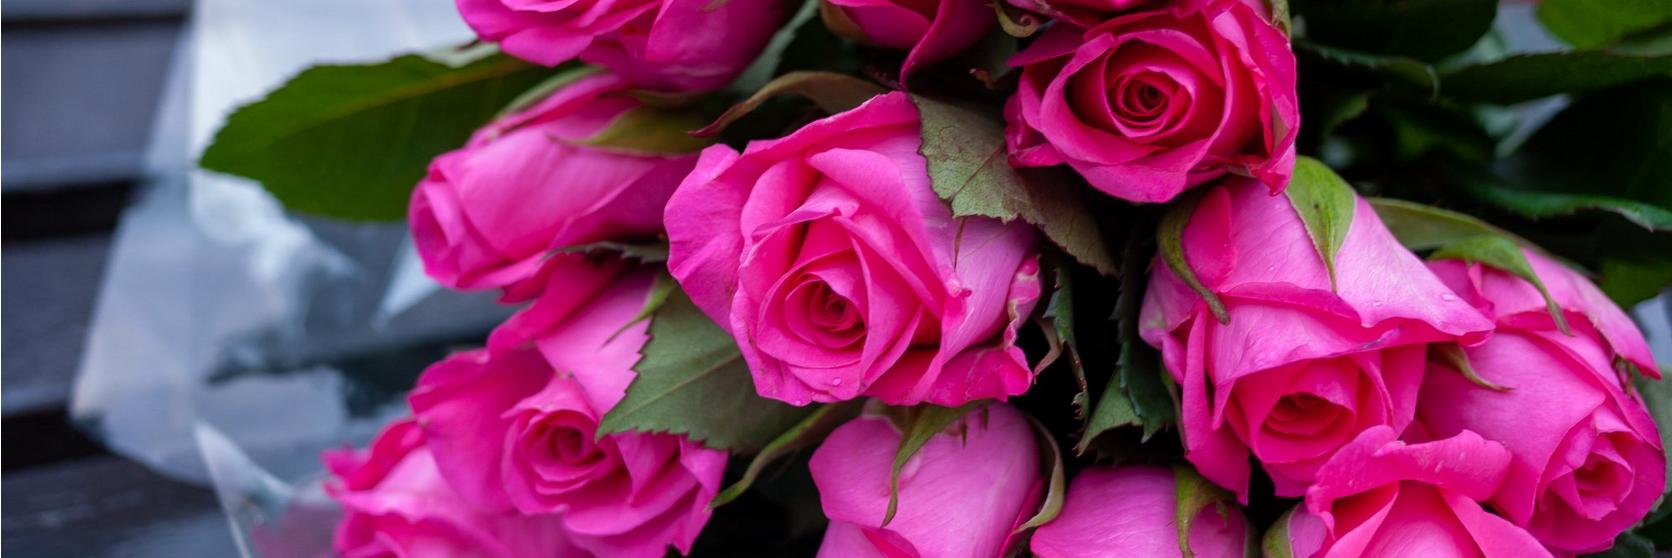 ff_pink_rose_bouquet